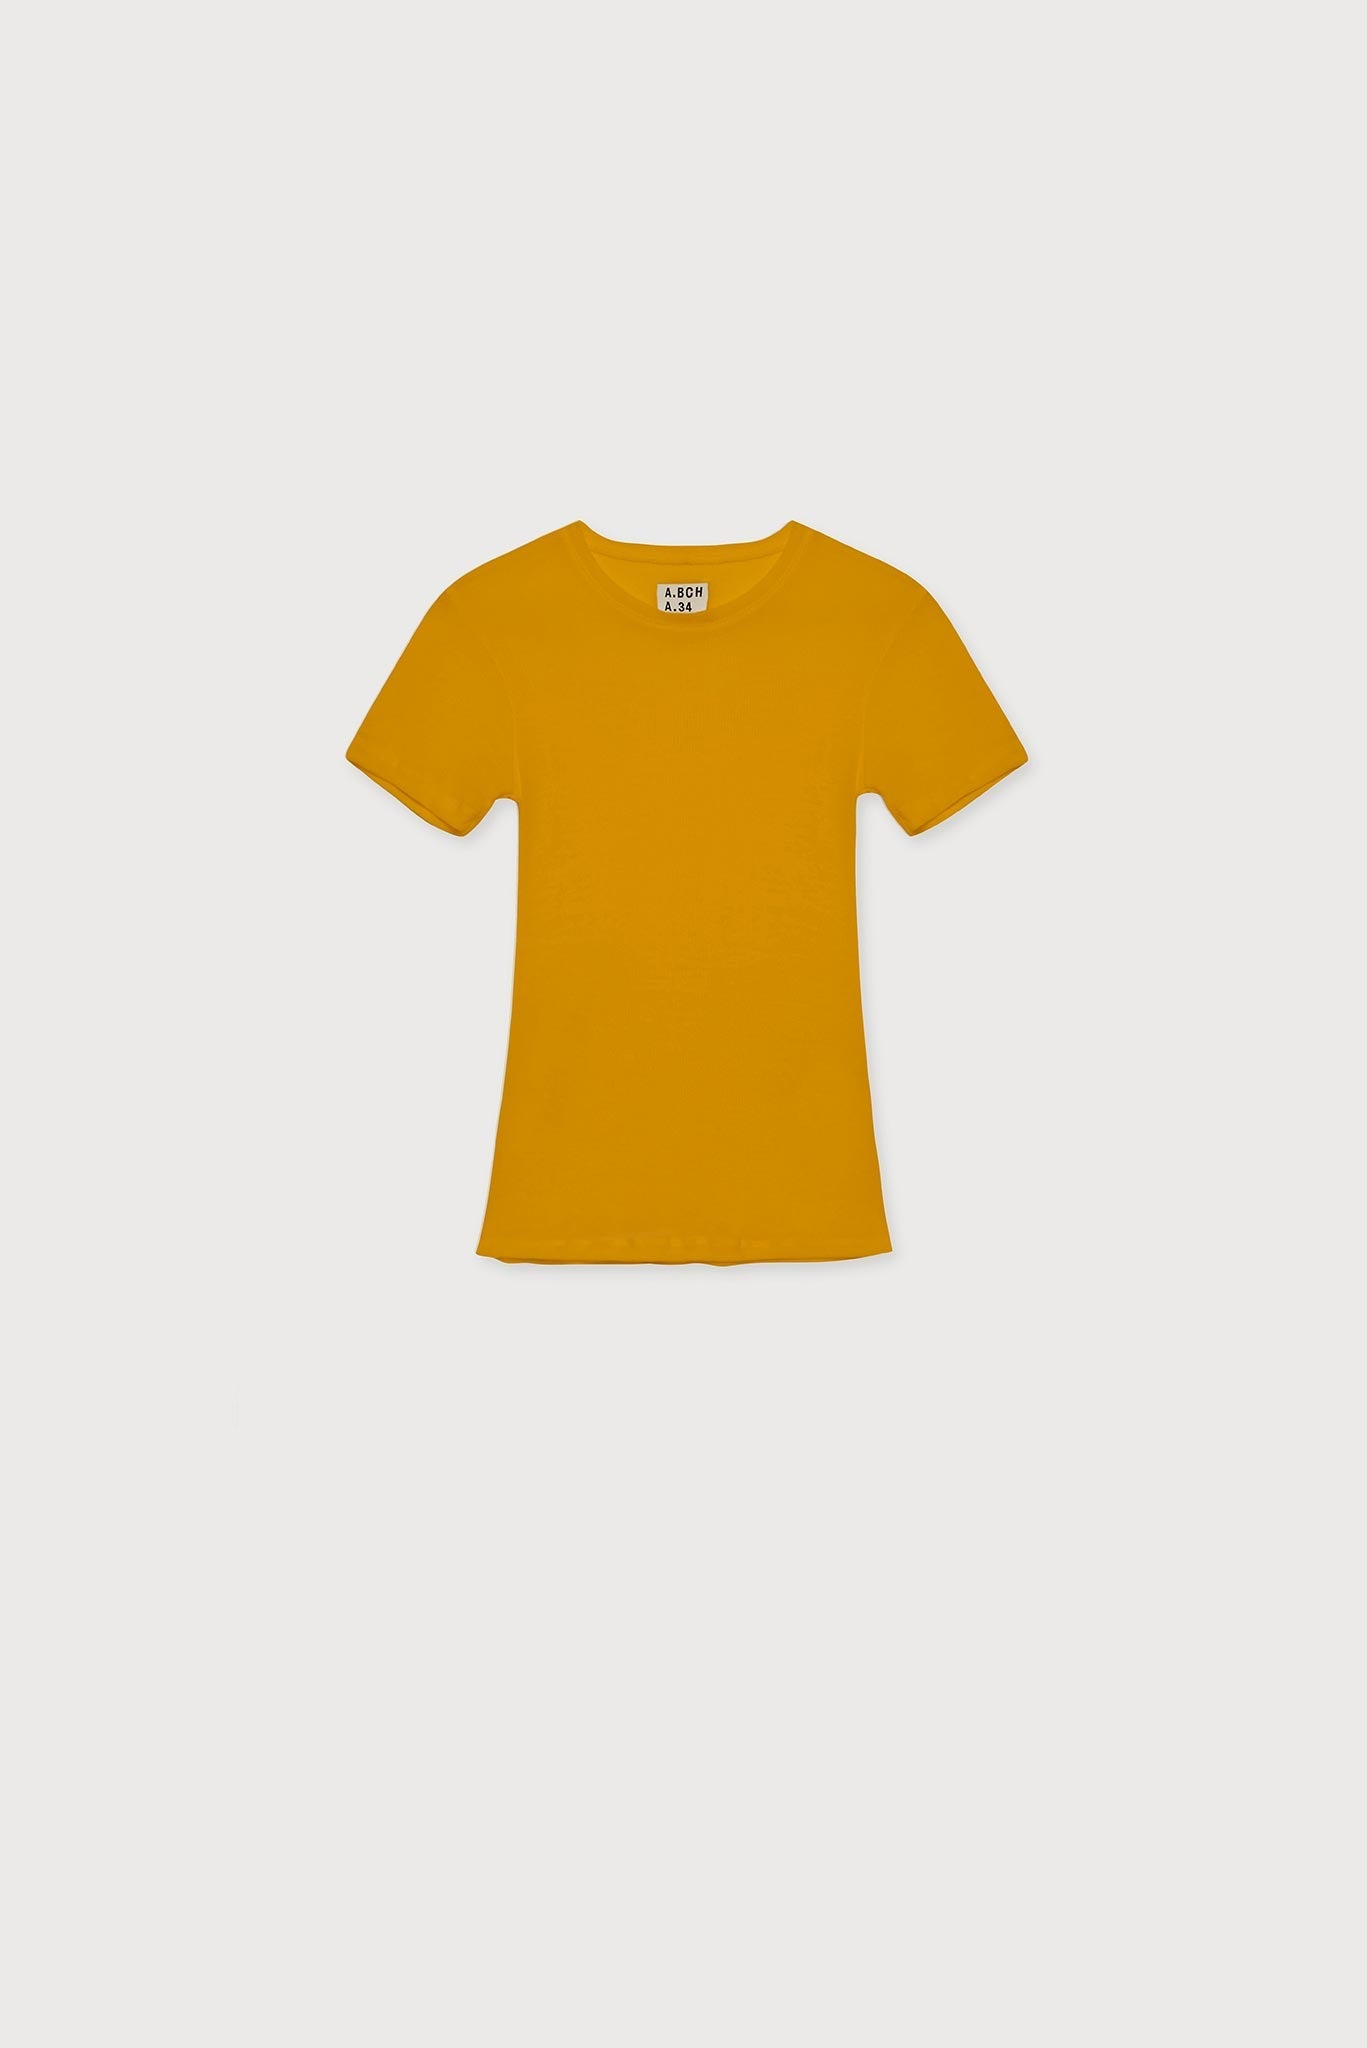 A.BCH A.34 Marigold Short Sleeve Thermal T-Shirt in Australian Merino